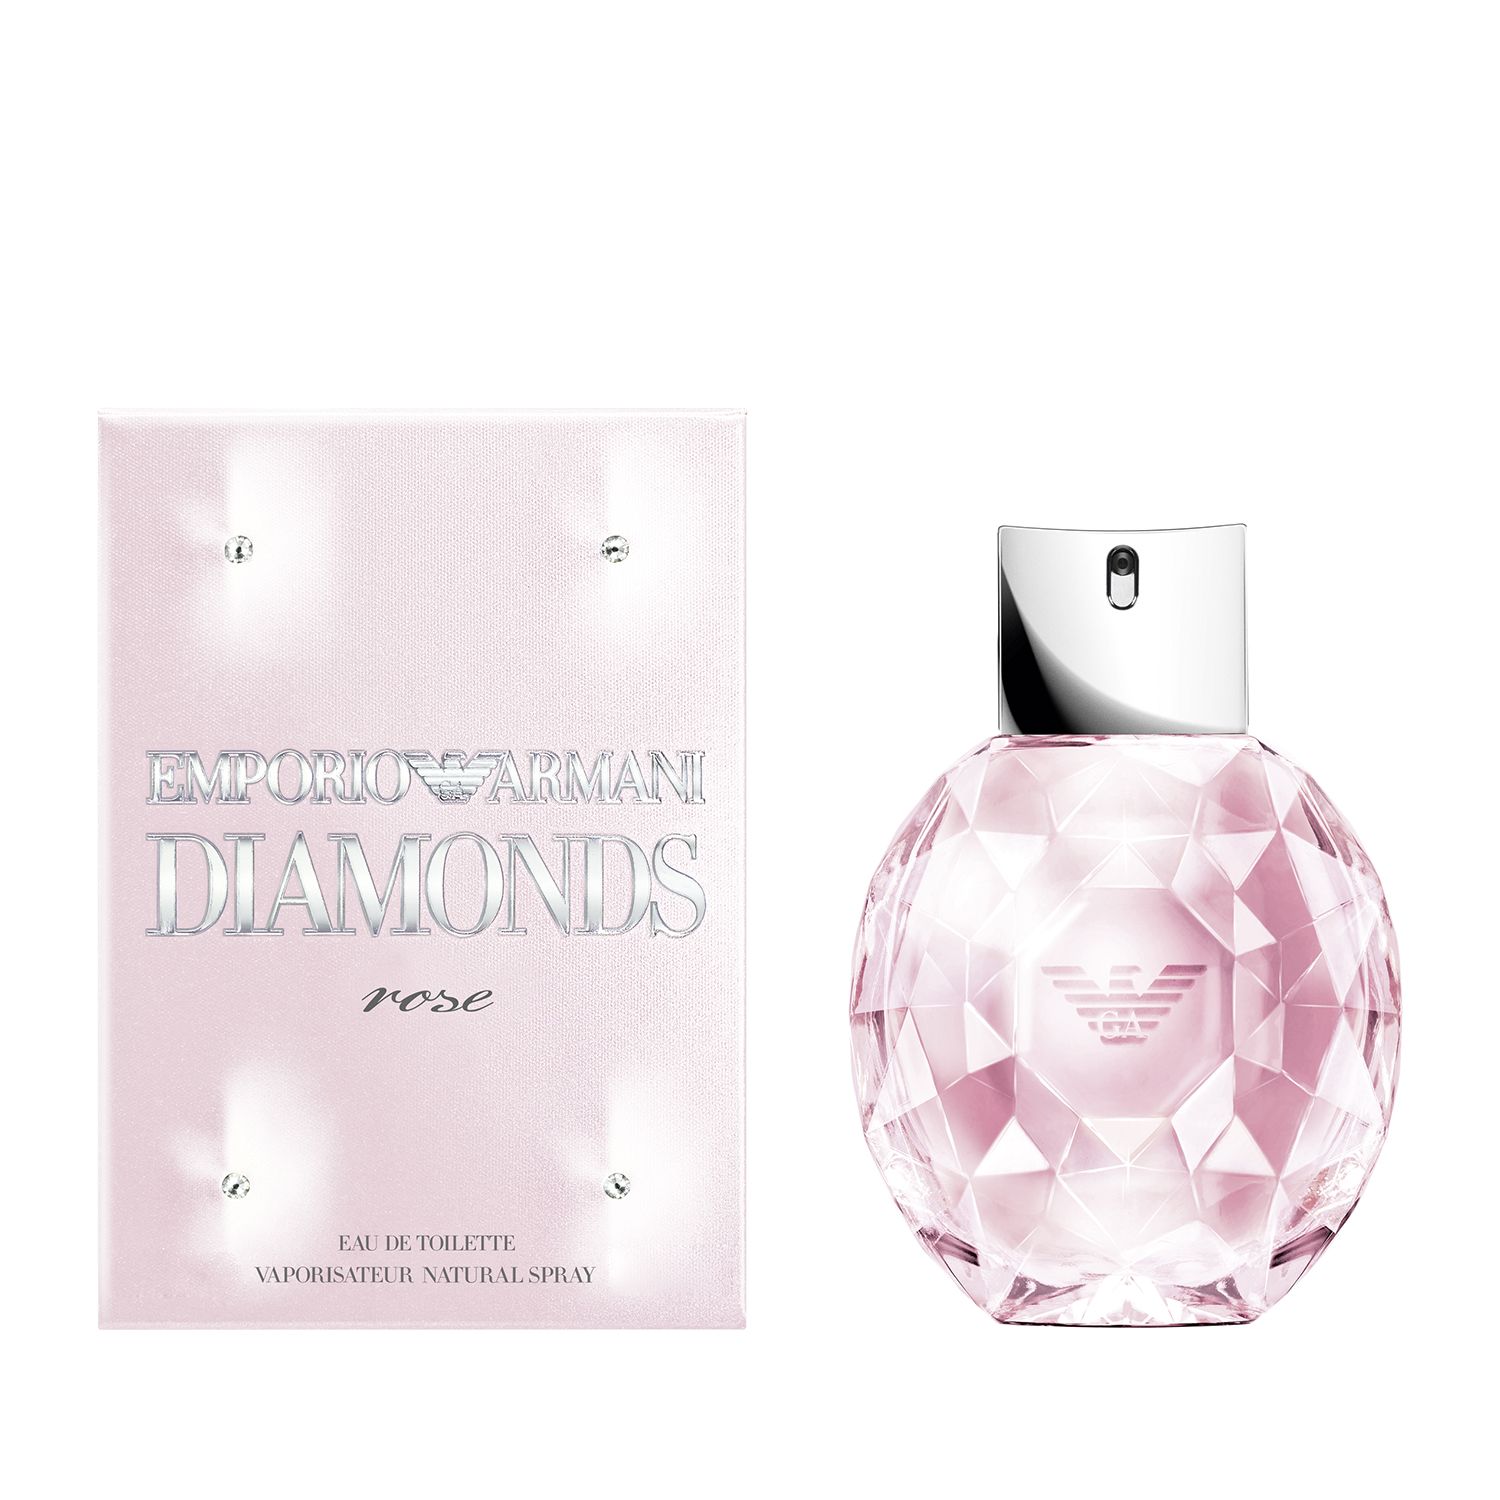 armani diamonds perfume gift set